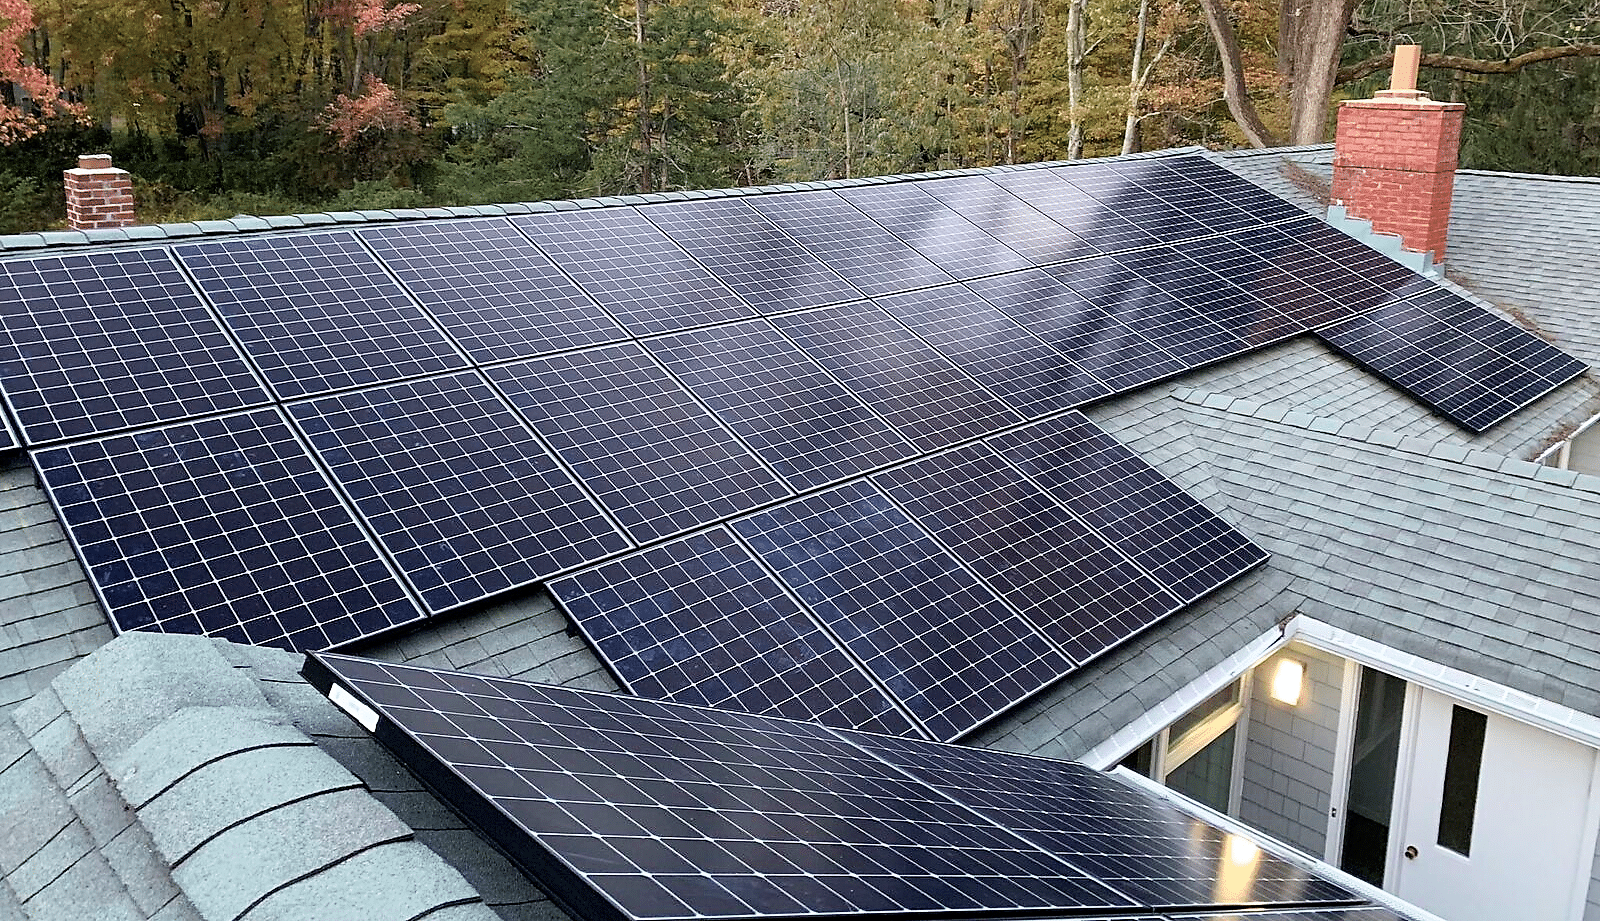 Green House Solar solar panel installation company in New Jersey